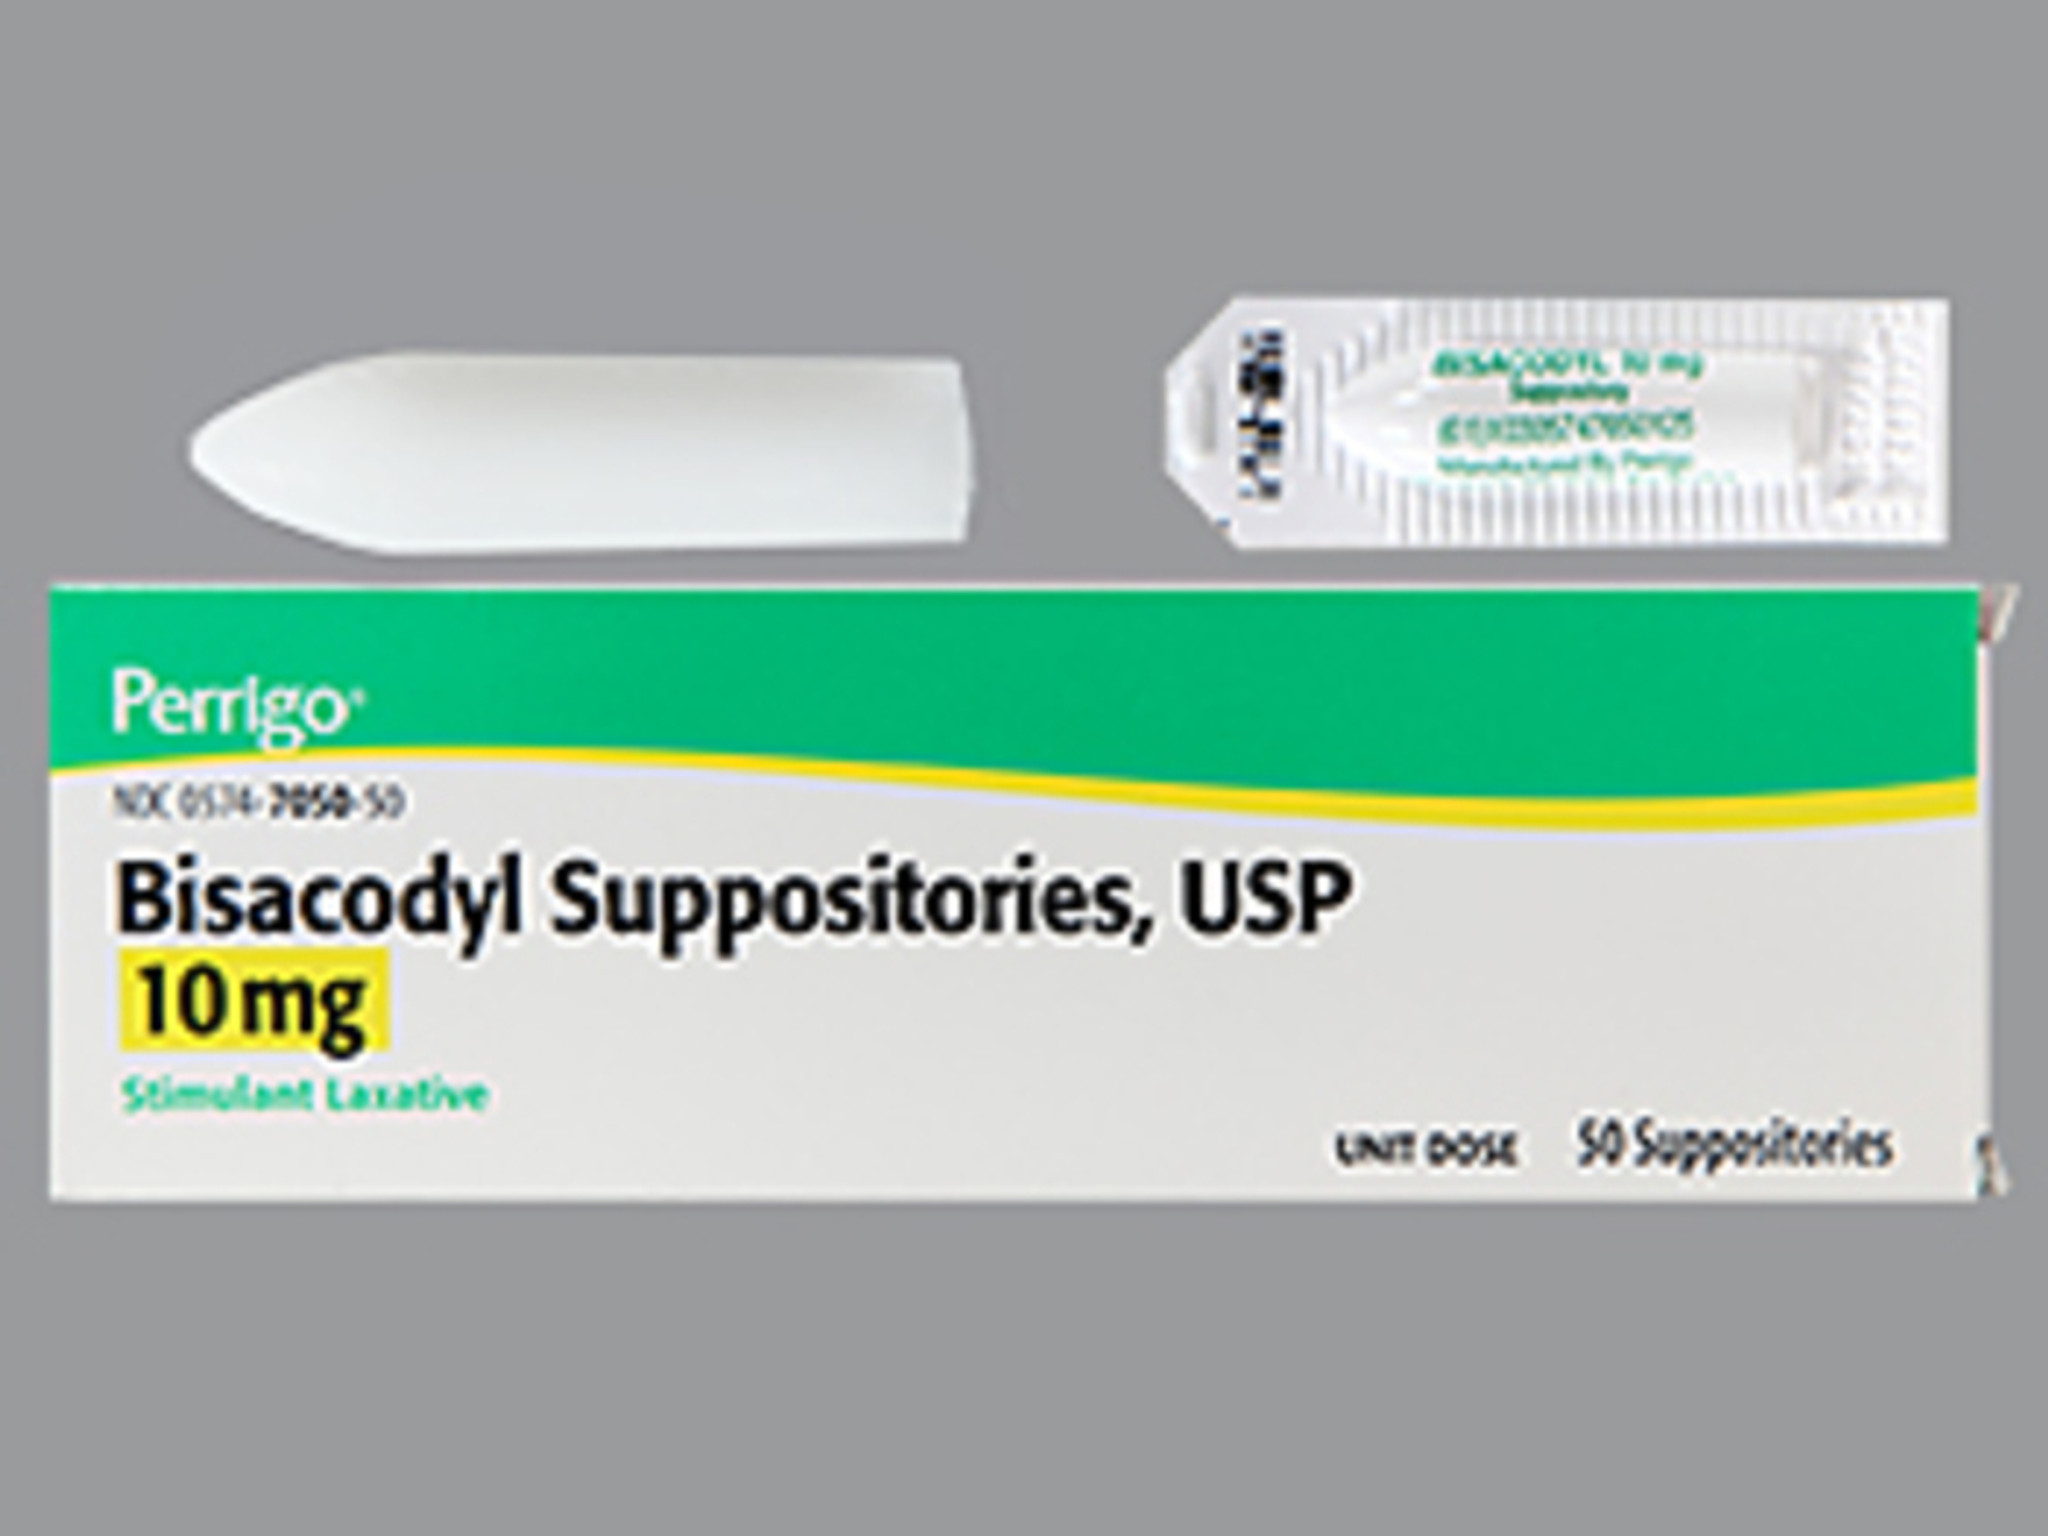 Bisacodyl Suppositories, USP Drug Facts